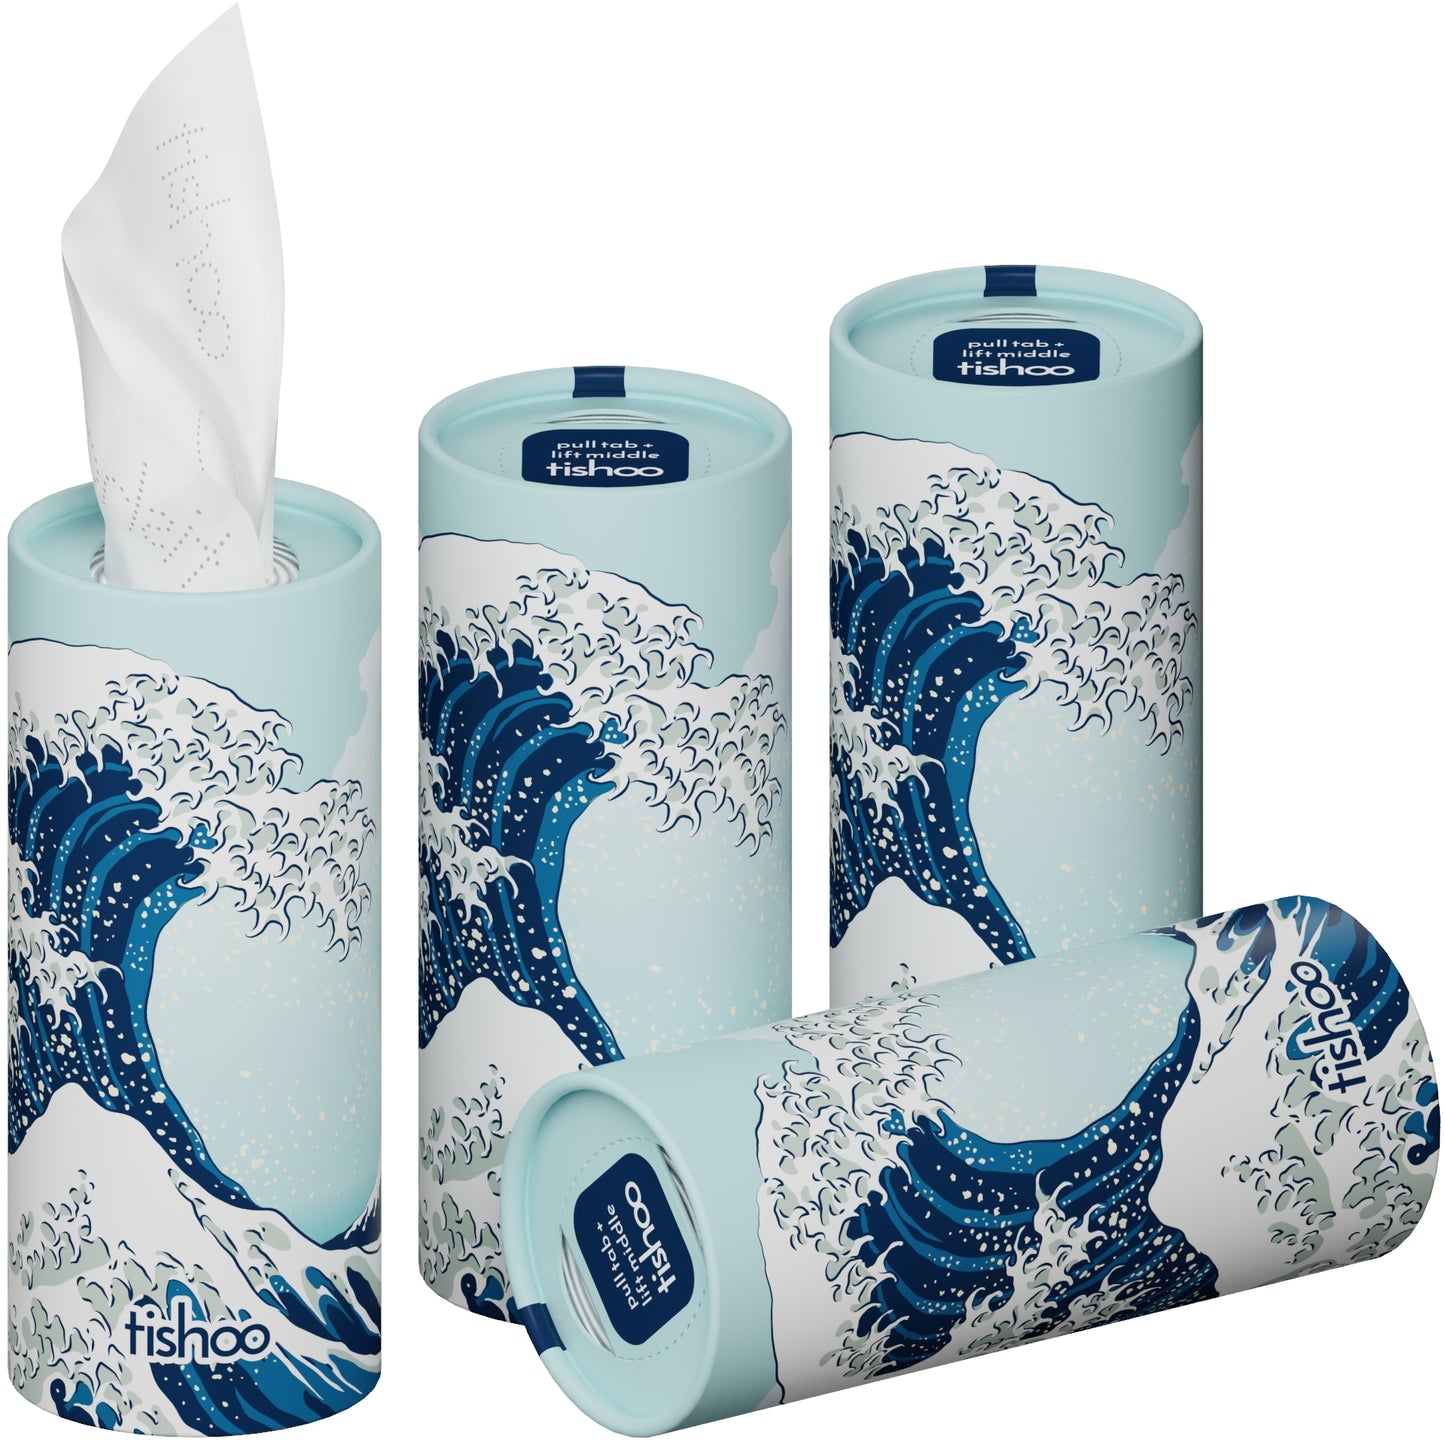 tishoo Luxury Tissues Blue/Wave design 4 tubes